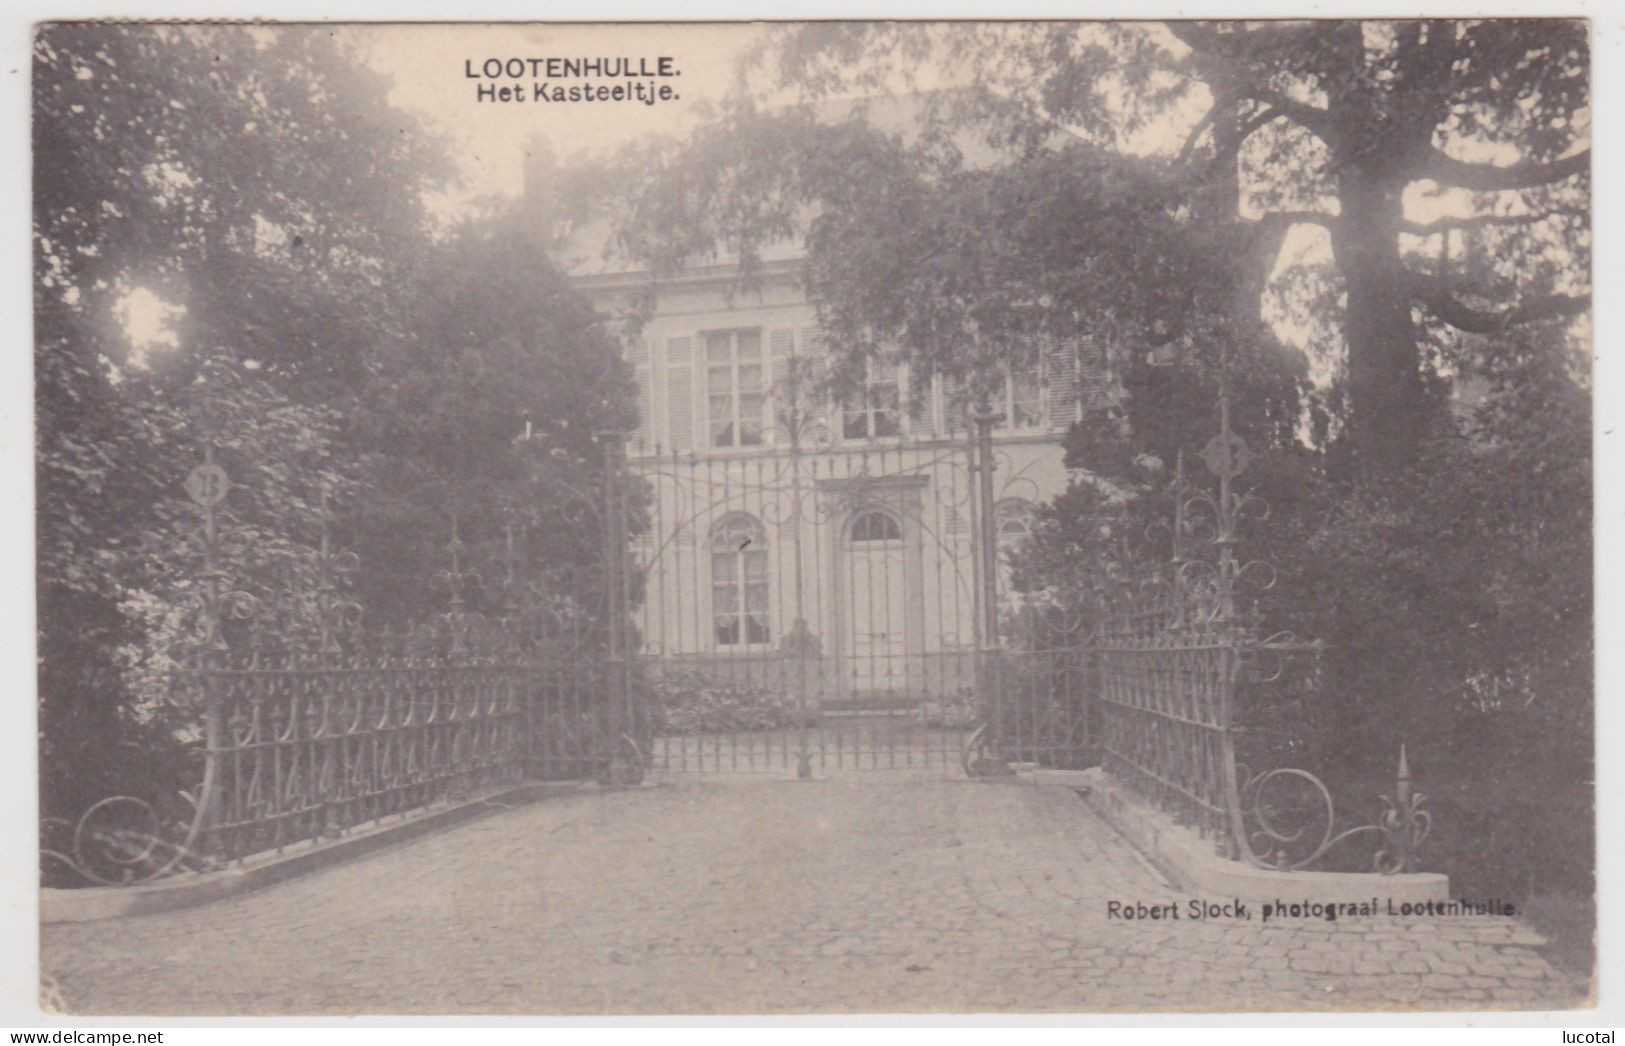 LootenHulle (Lotenhulle) - Het Kasteeltje - Uitgever Robert Slock, Fotograaf, Lotenhulle - Aalter